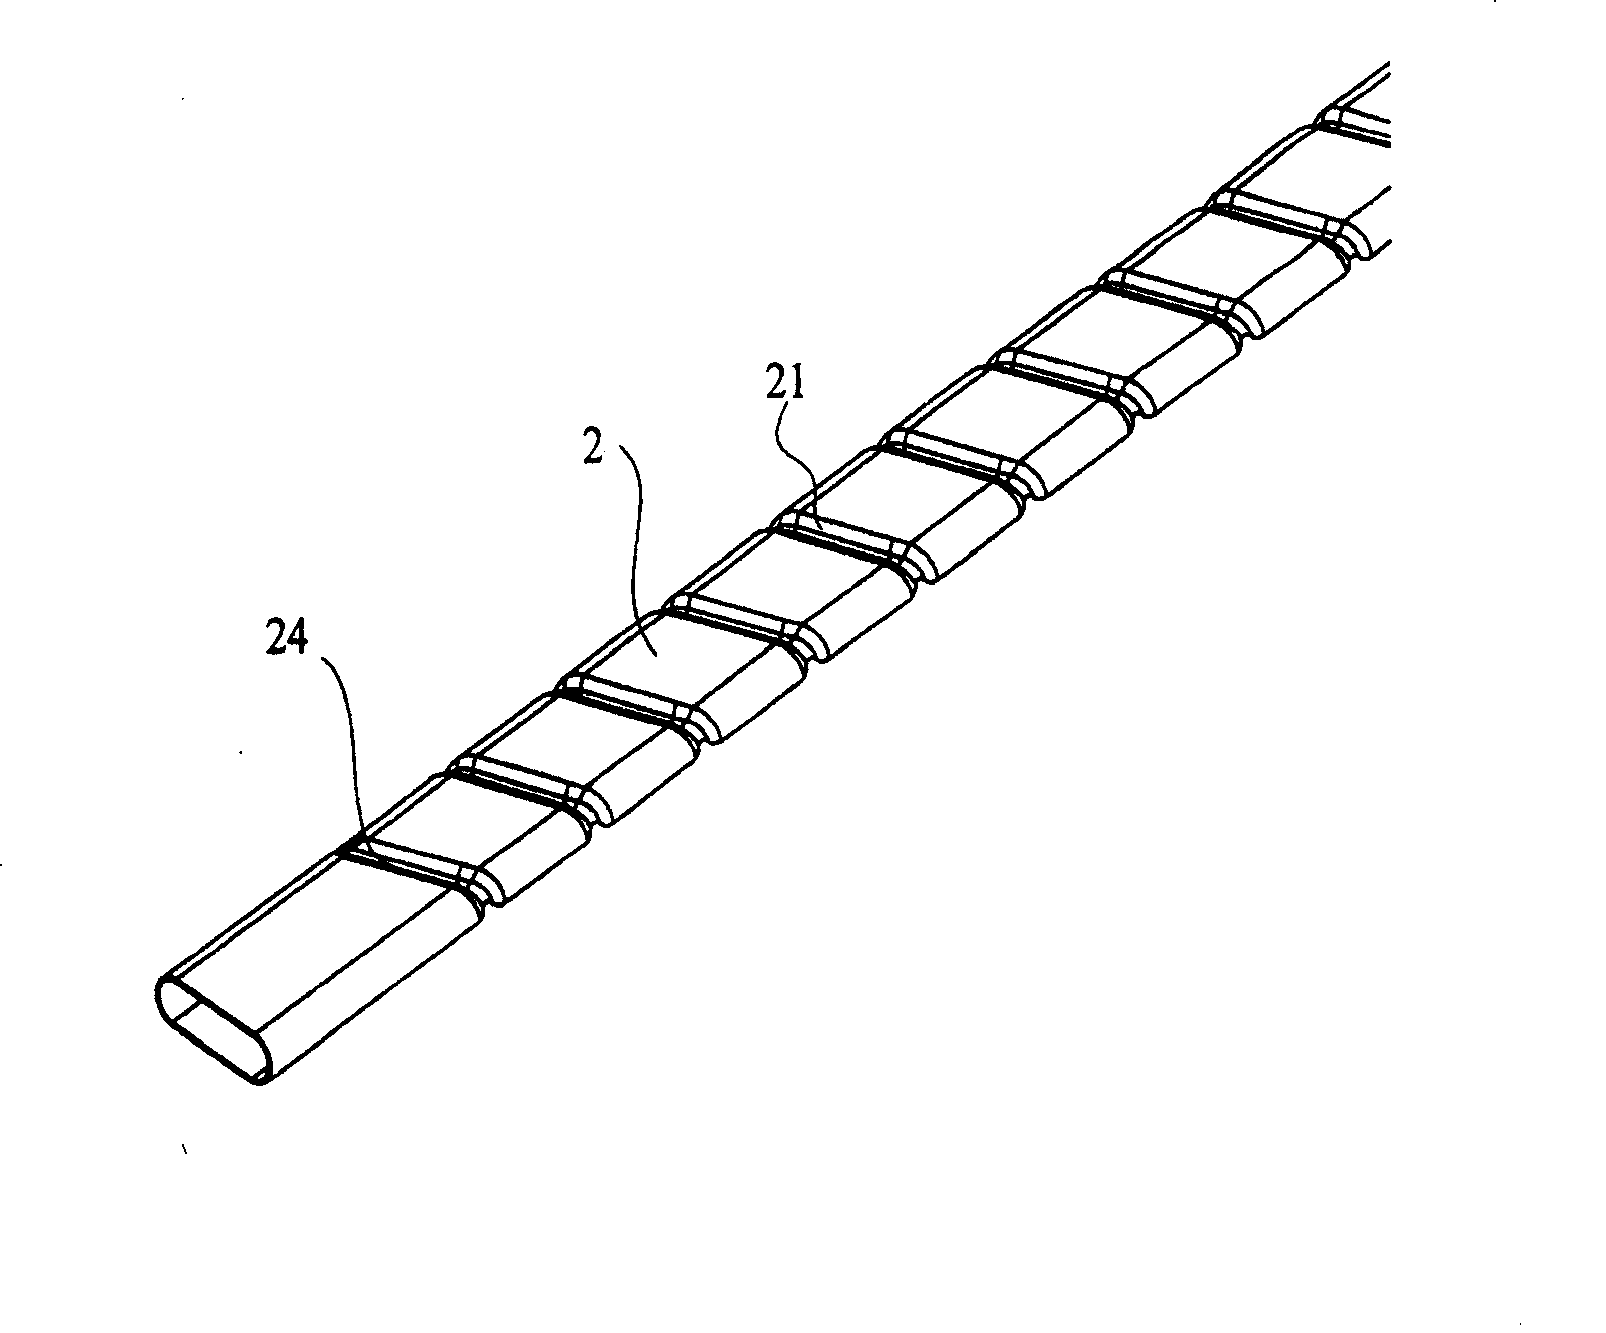 Multi-tube pass type heat exchanger